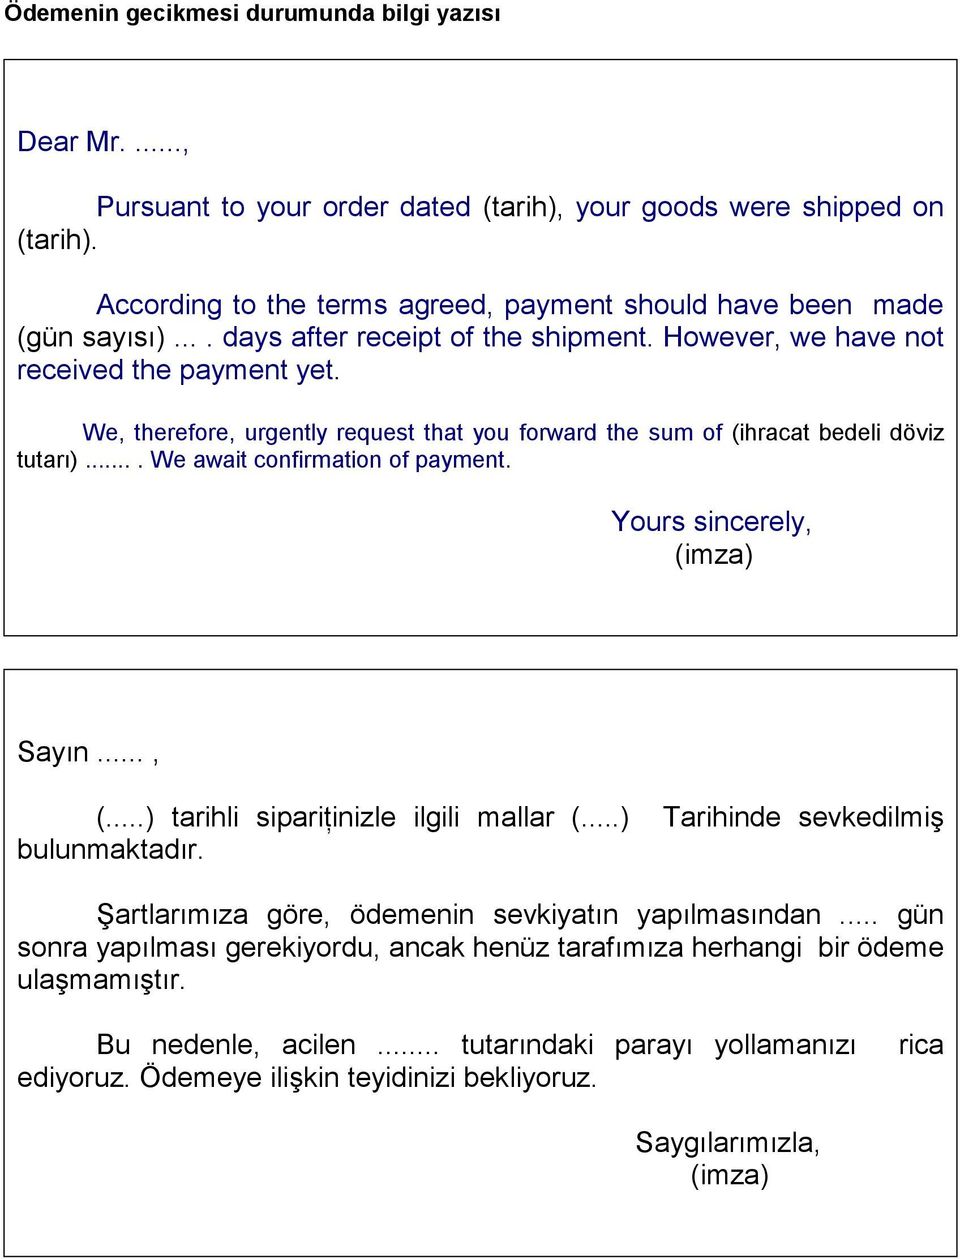 We, therefore, urgently request that you forward the sum of (ihracat bedeli döviz tutarı).... We await confirmation of payment. Yours sincerely, Sayın..., (...) tarihli sipariţinizle ilgili mallar (.